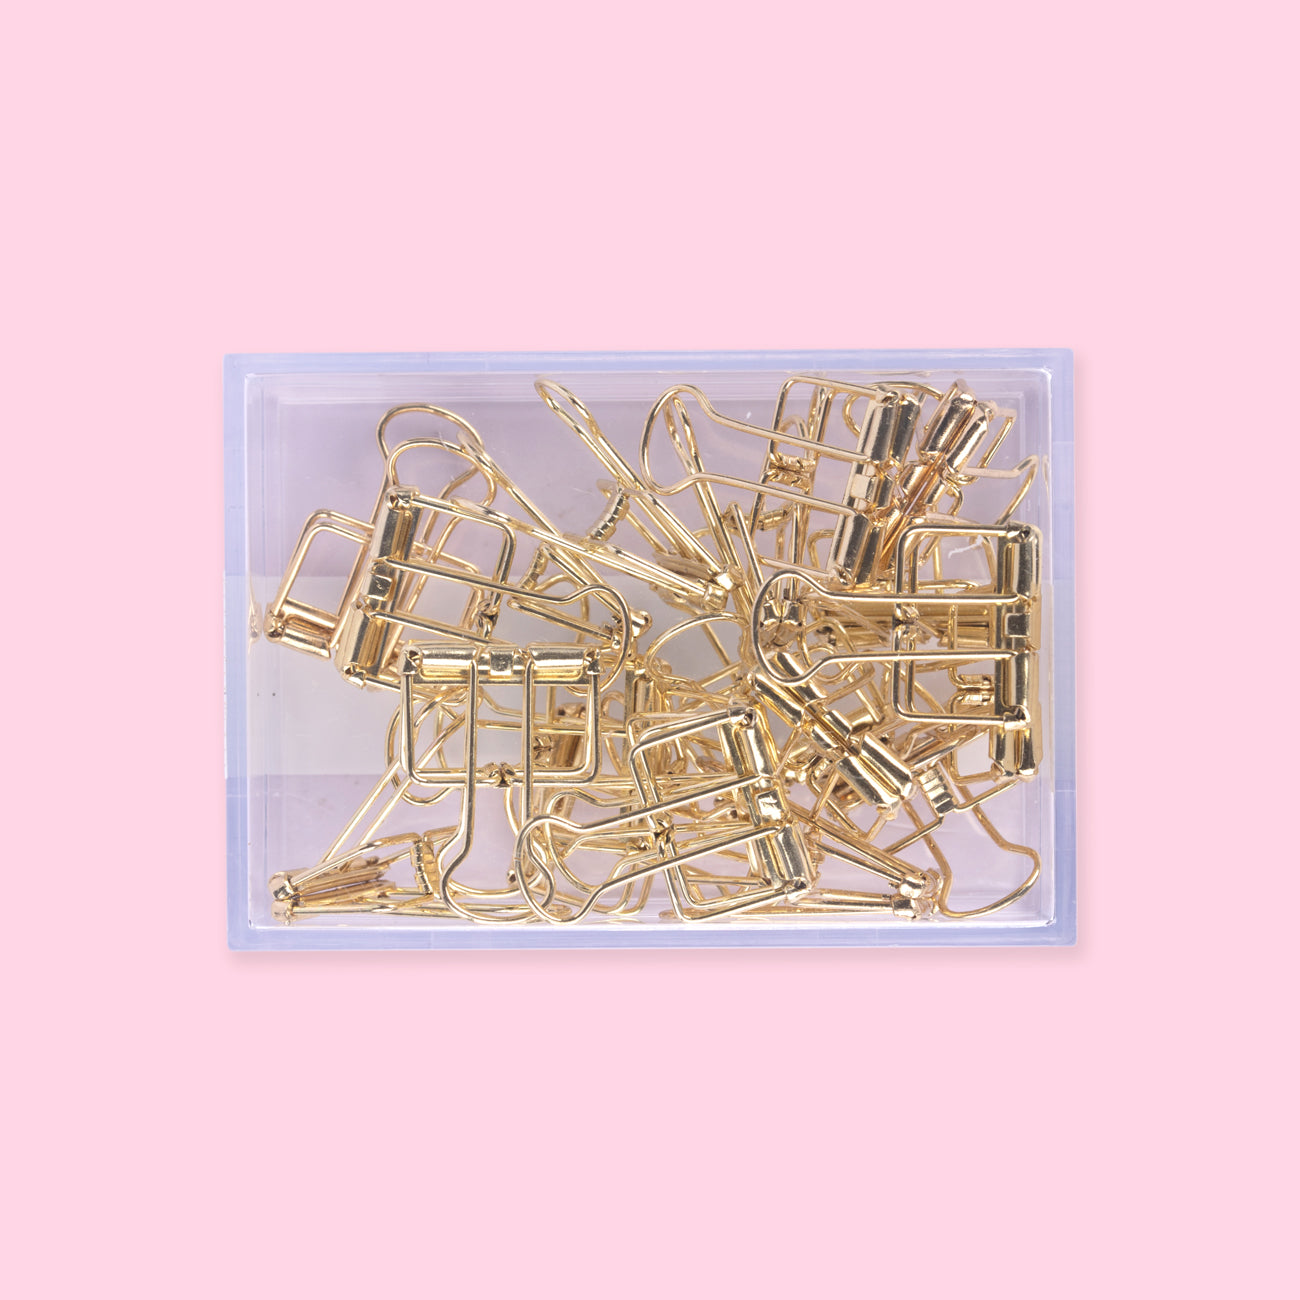 Hollow Binder Paper Clip 20 Pack - Gold